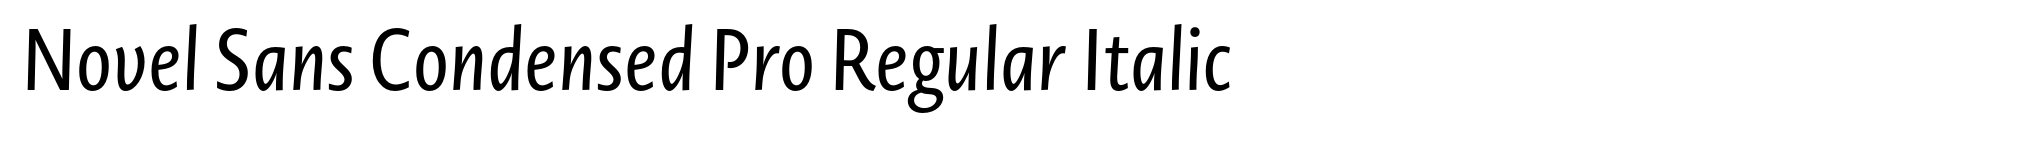 Novel Sans Condensed Pro Regular Italic image